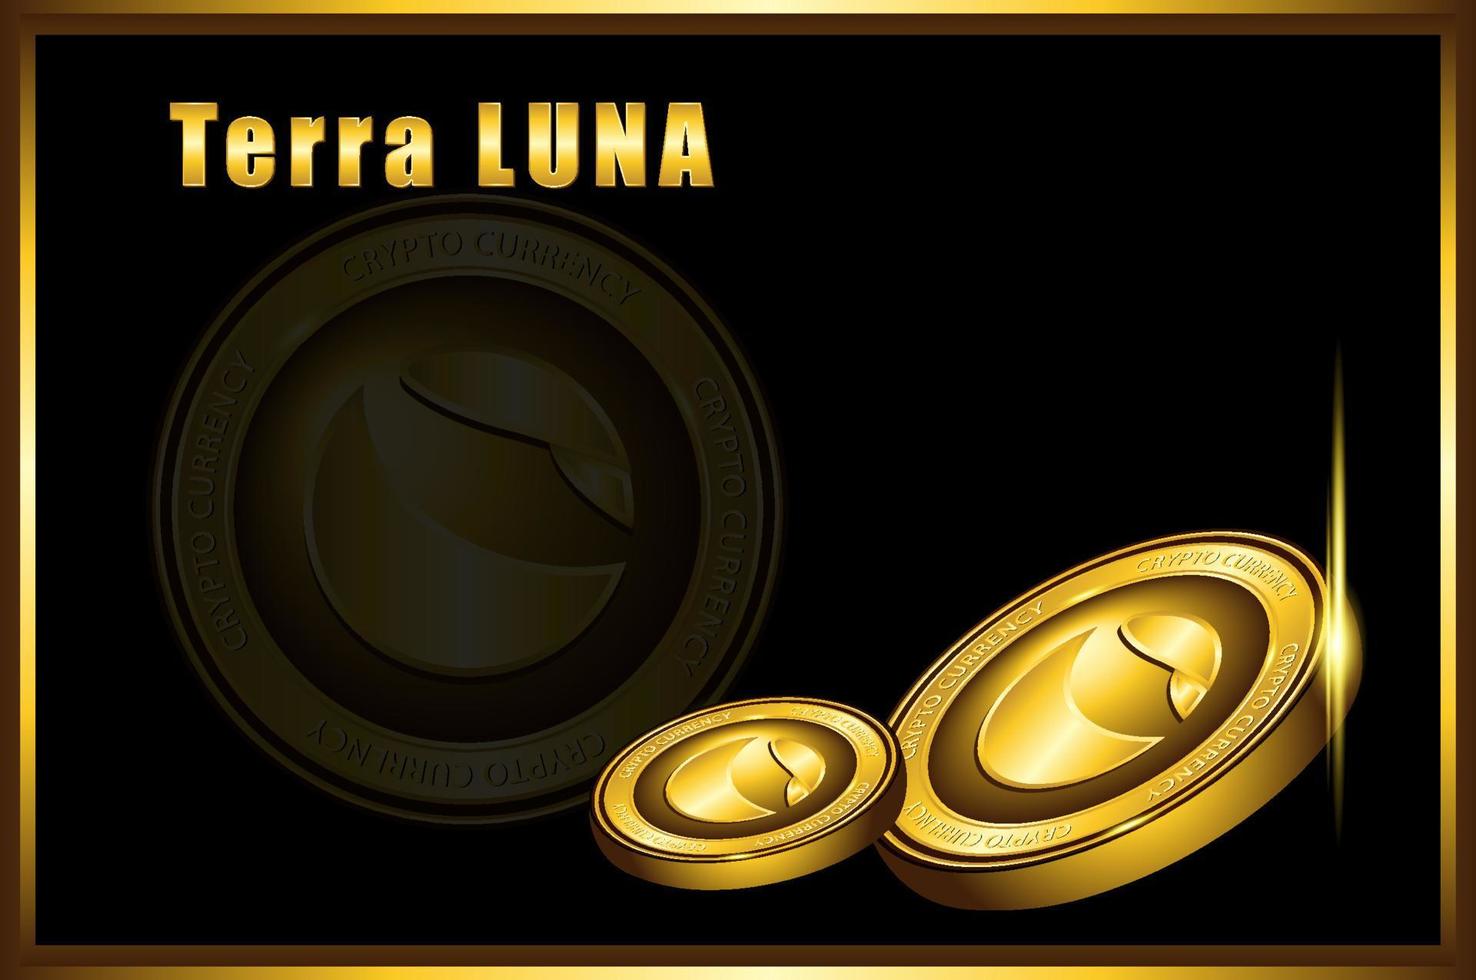 terra mynt guldmynt i mörk bakgrund, terra luna kryptovaluta vektor